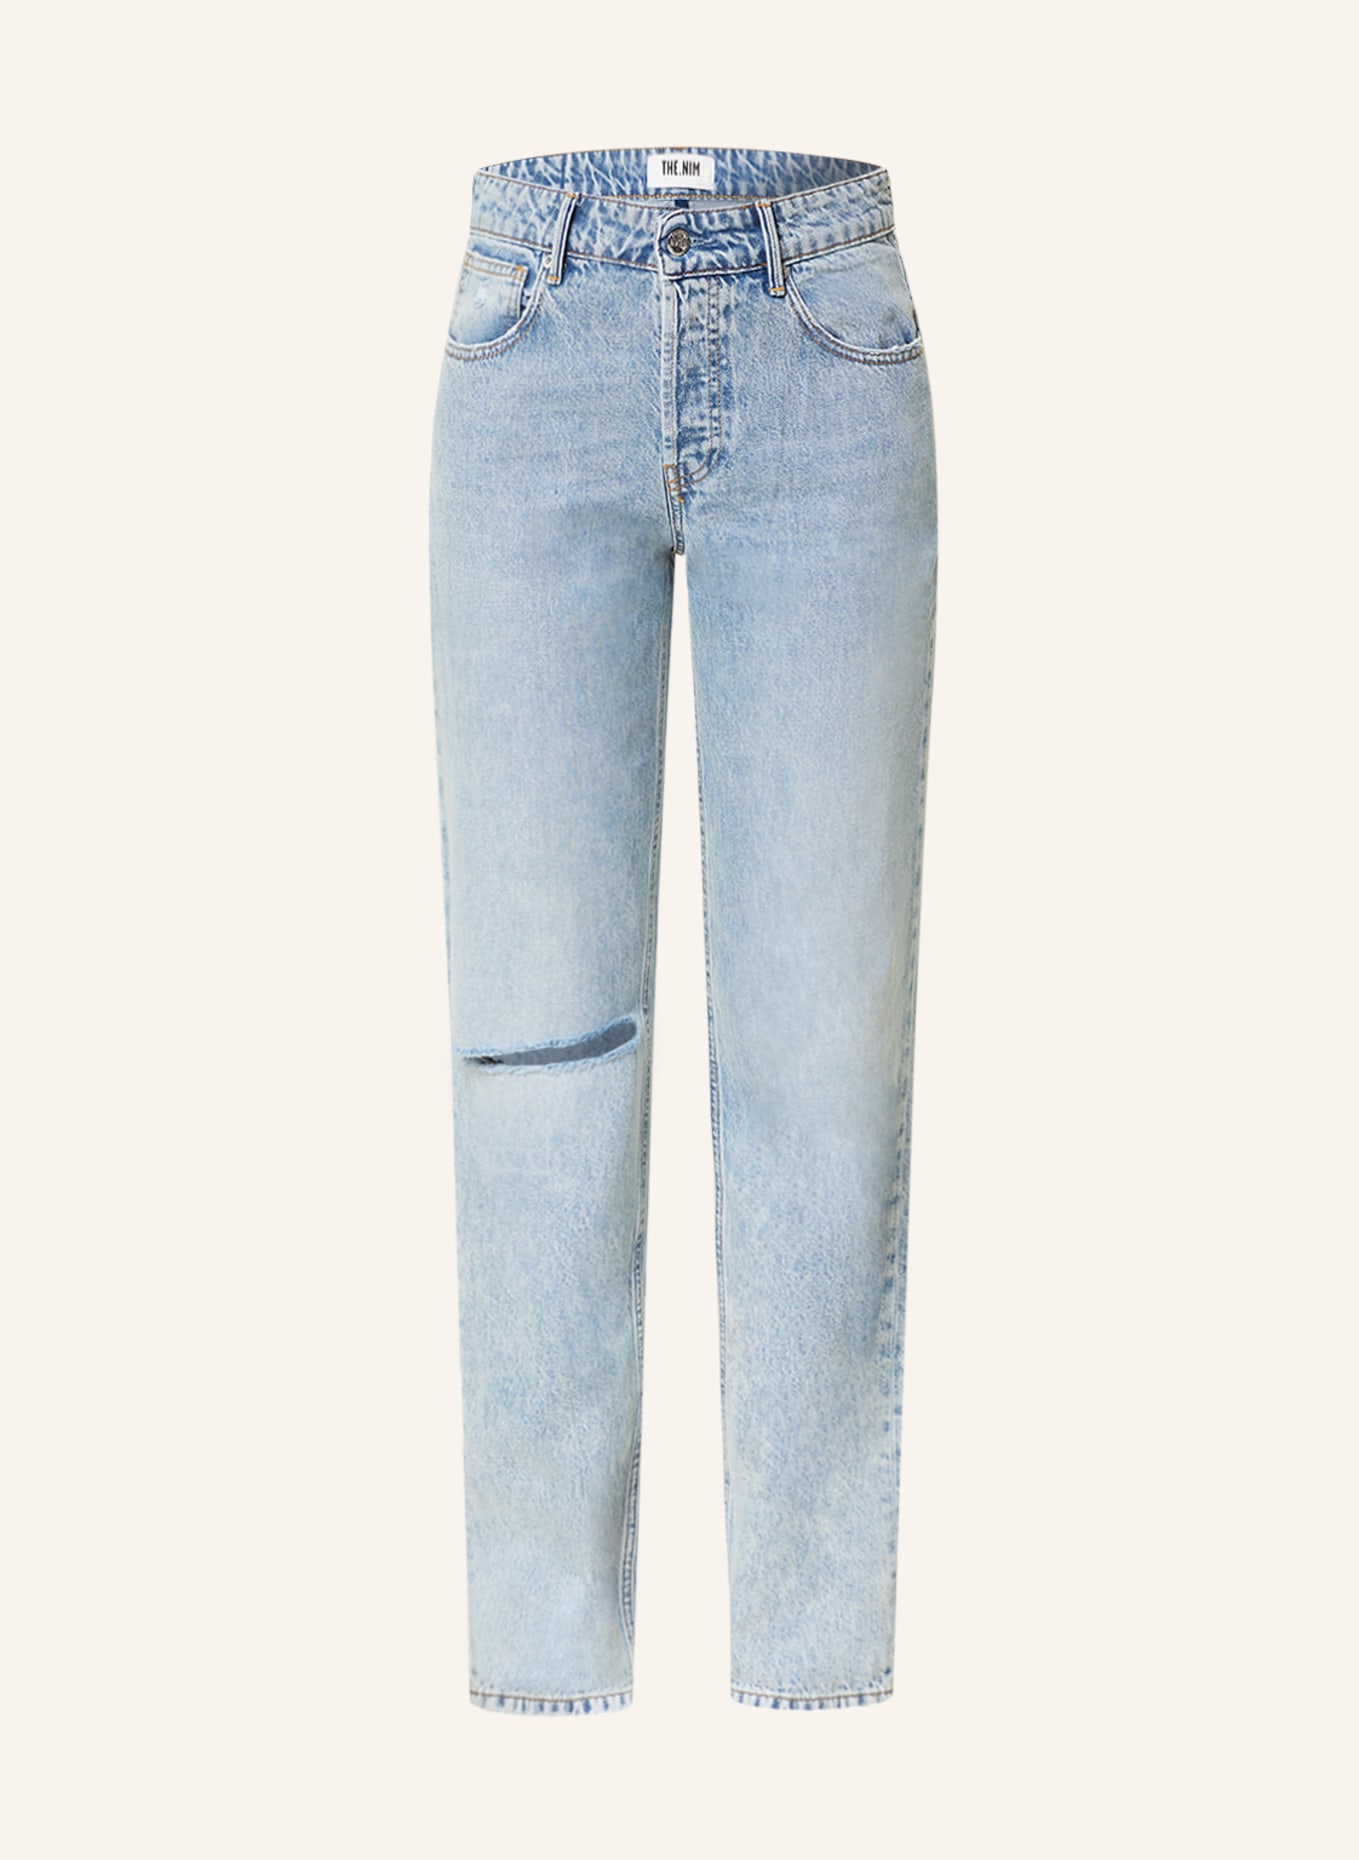 THE.NIM STANDARD Straight Jeans JANE, Farbe: W740-VTL VINTAGE LIGHT (Bild 1)